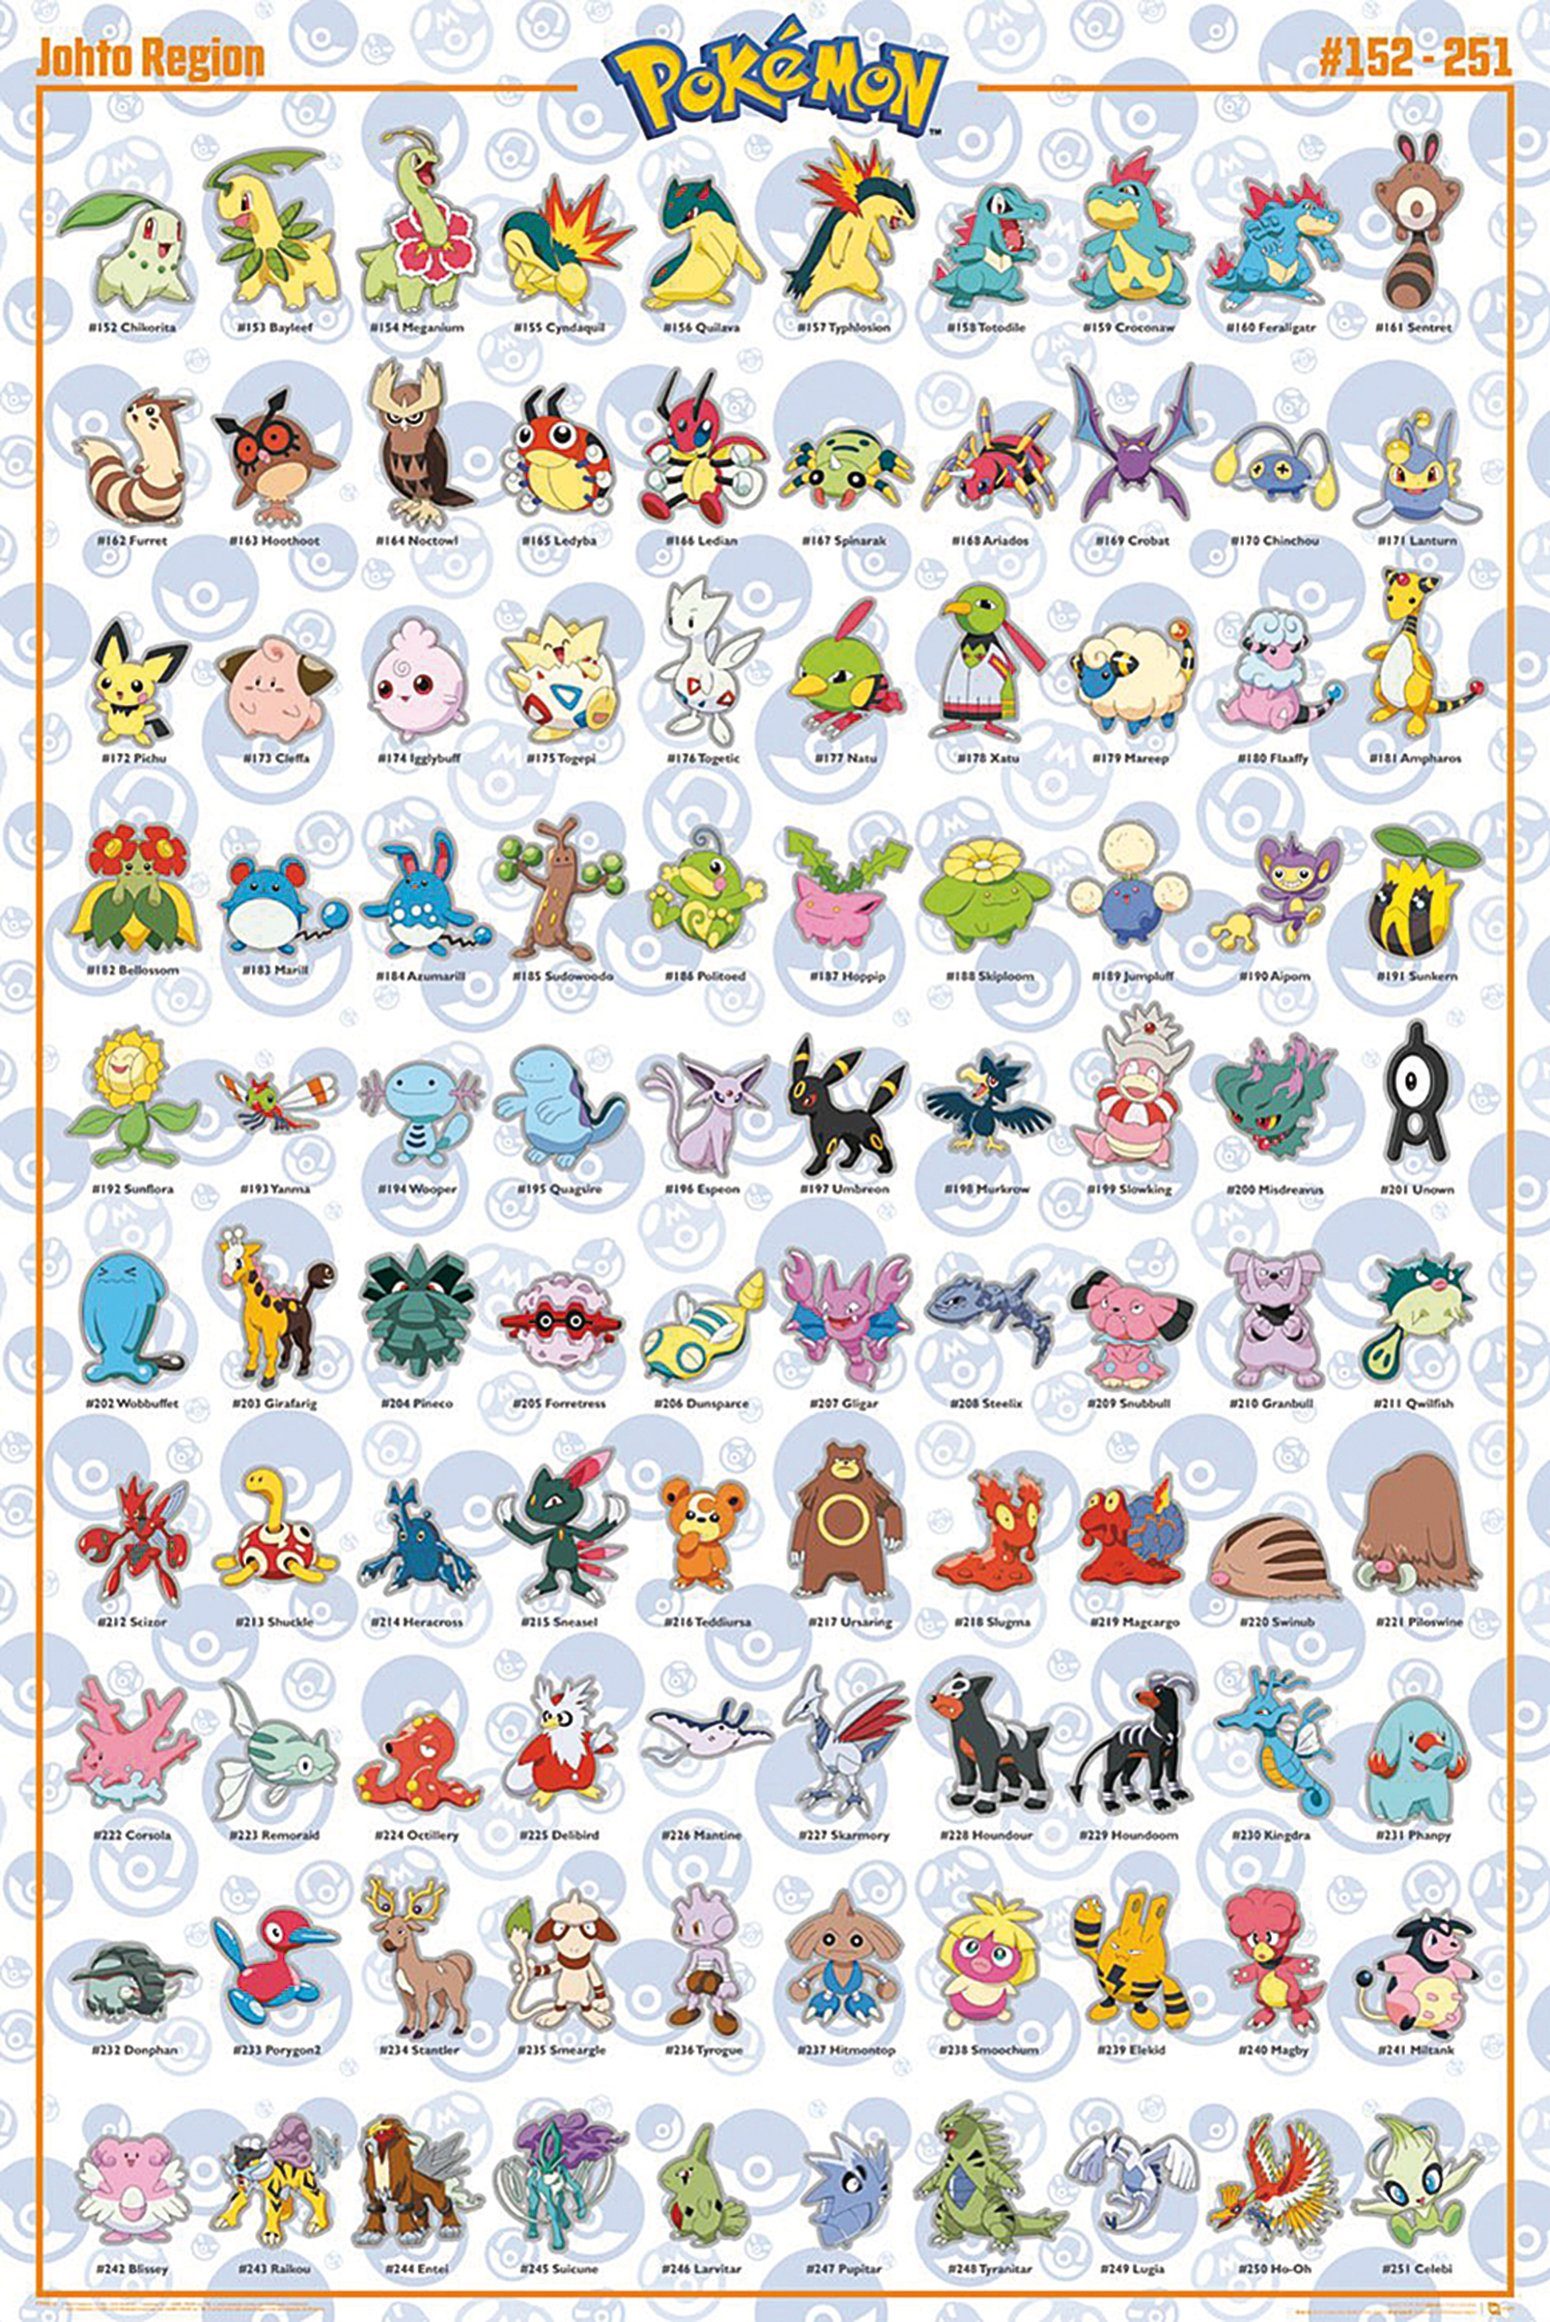 GB eye Плакат Pokémon Плакат Johto Region (152-251) 61 x 91,5 cm